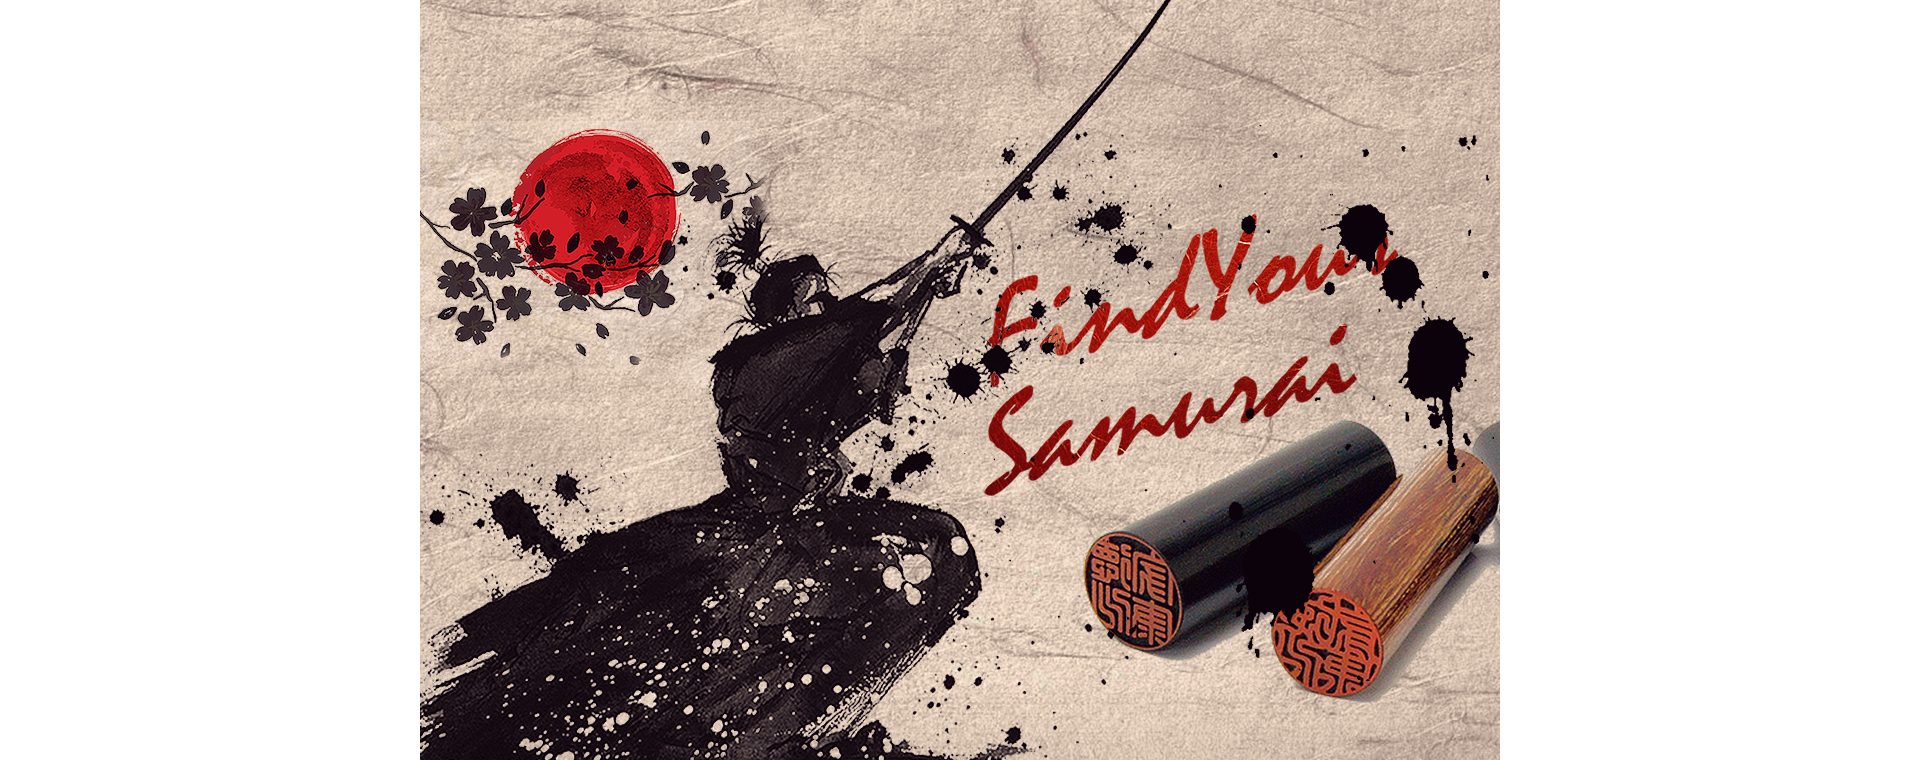 Samurai Hanko